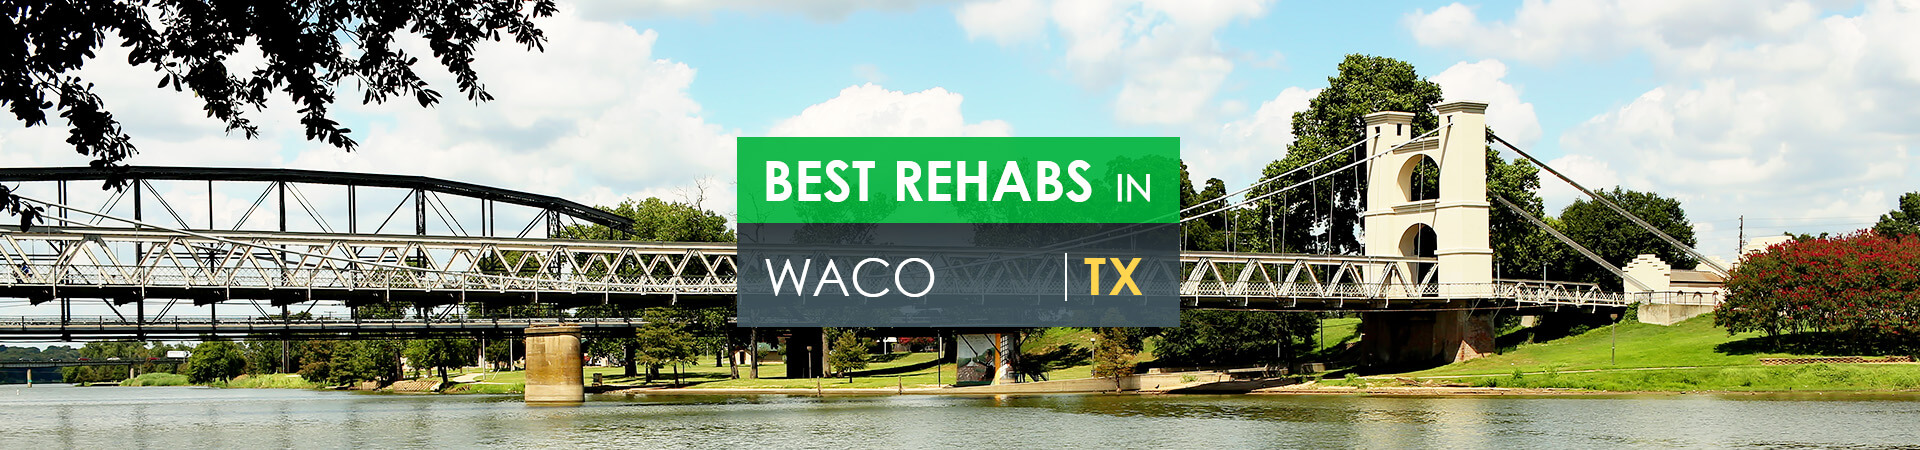 Best rehabs in Waco, TX